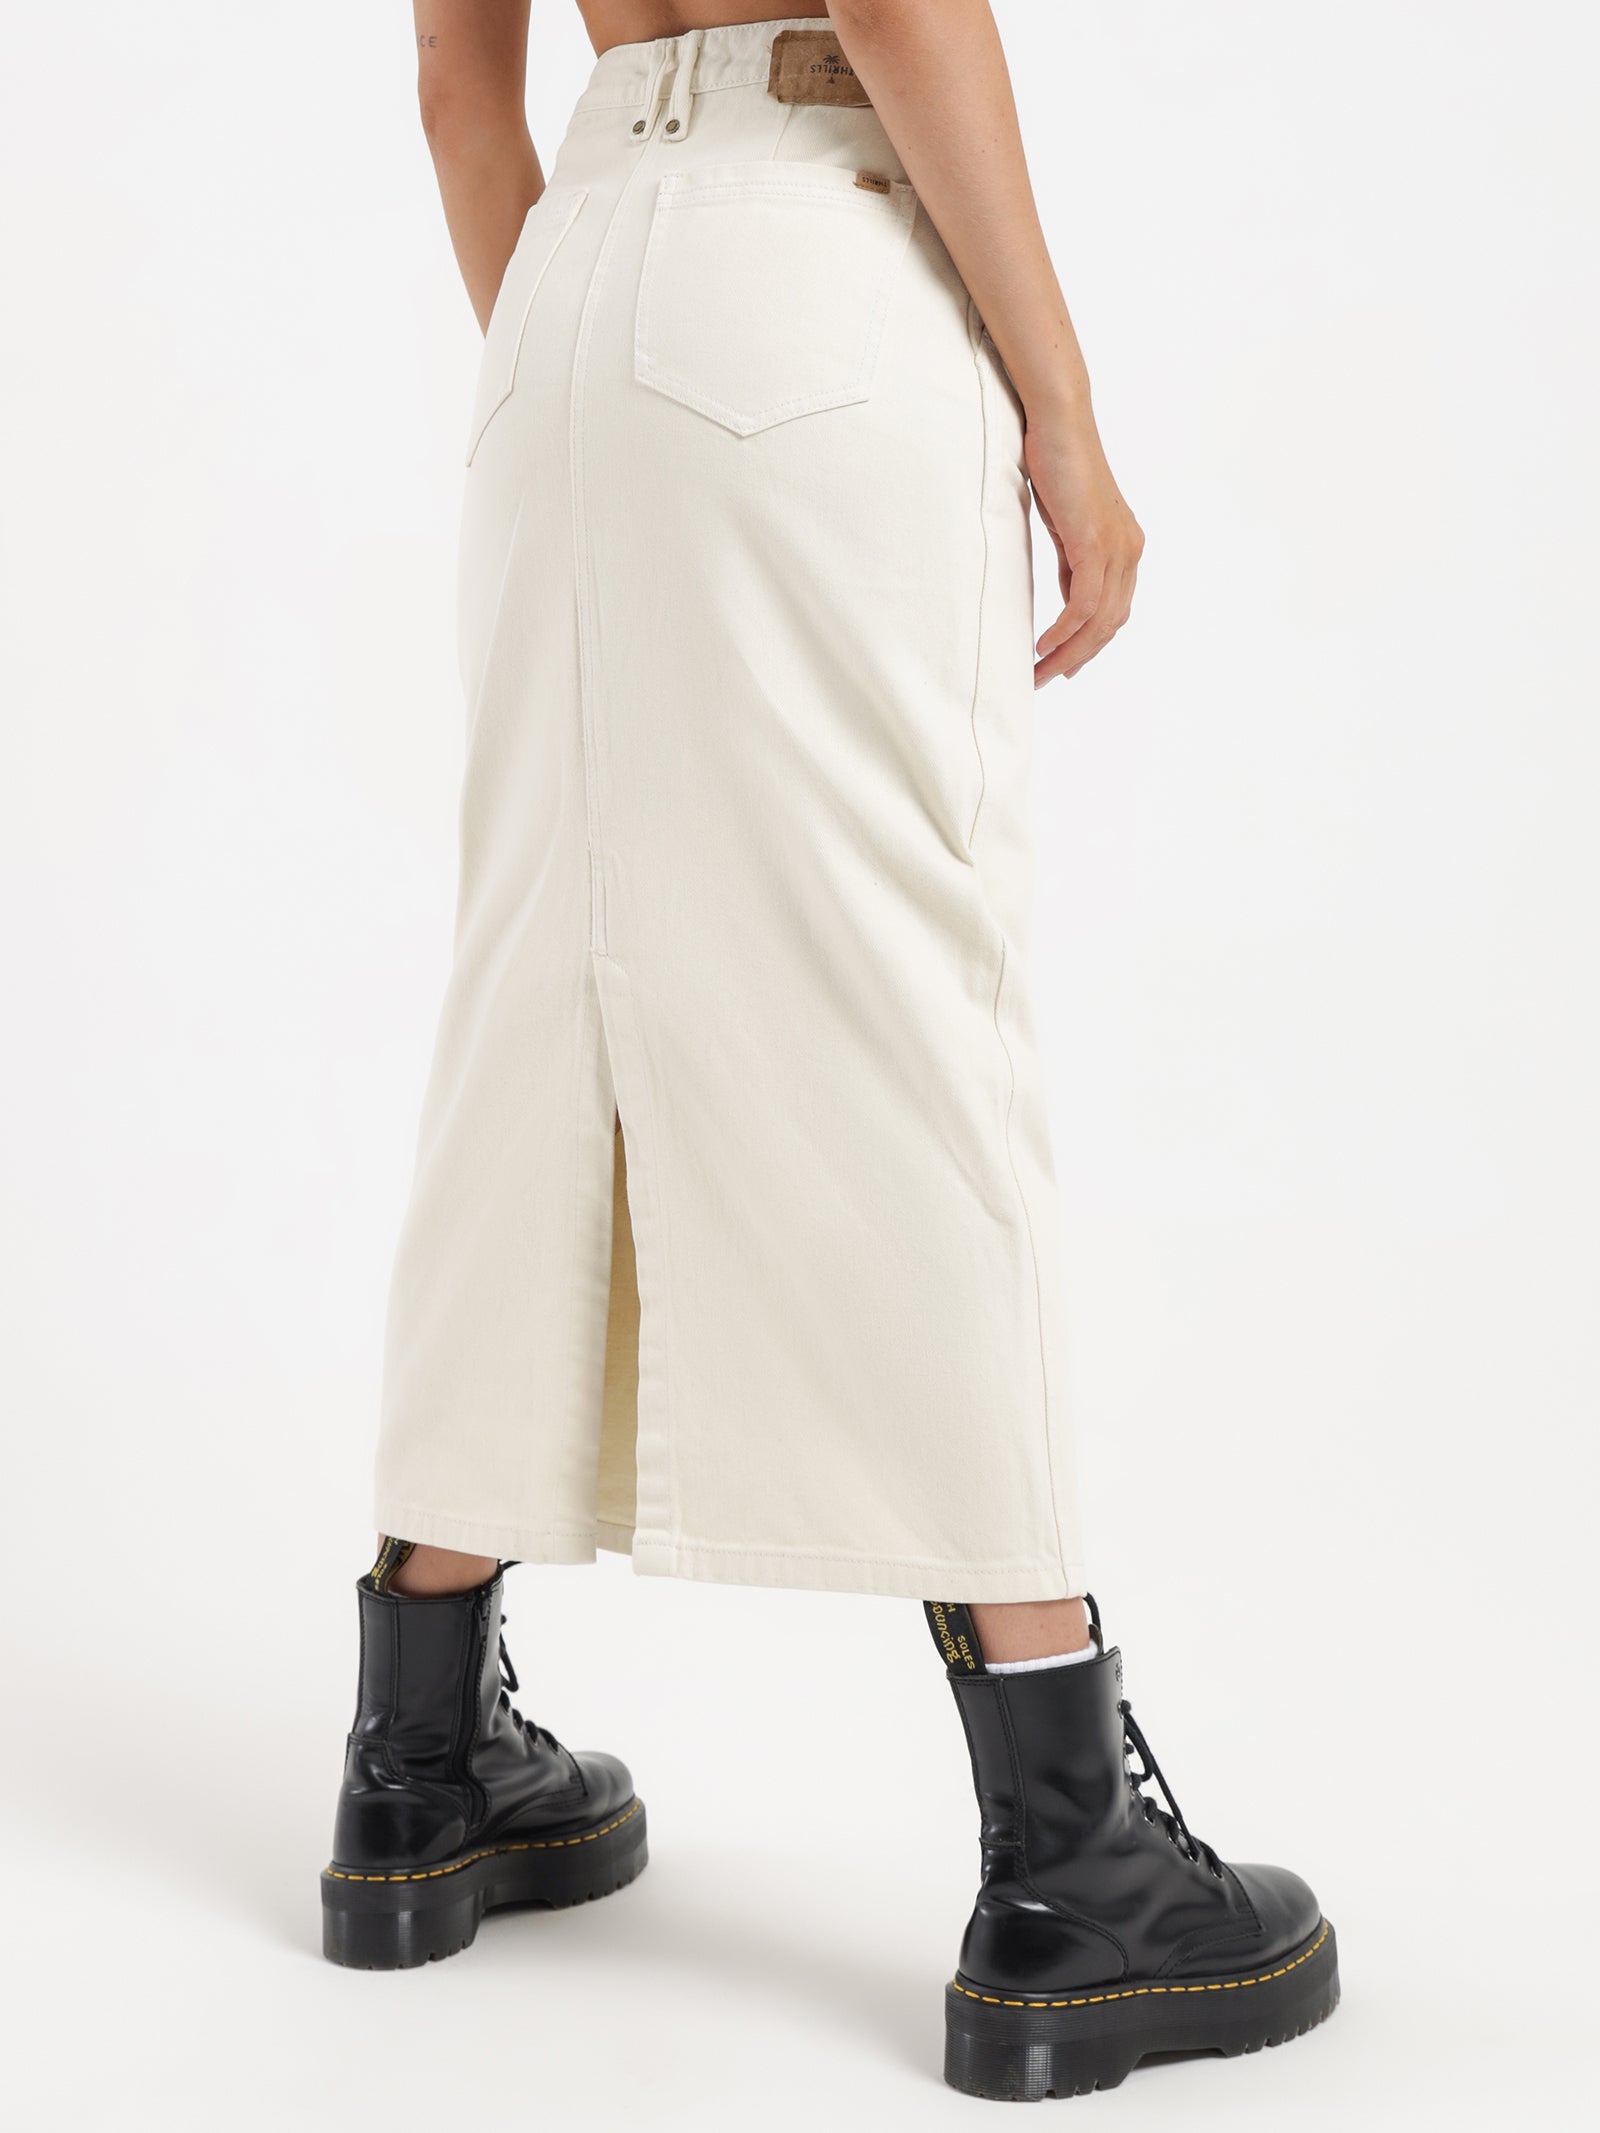 Biba Ethnic Skirts : Buy Biba Off White Cotton Flared Skirt Online | Nykaa  Fashion